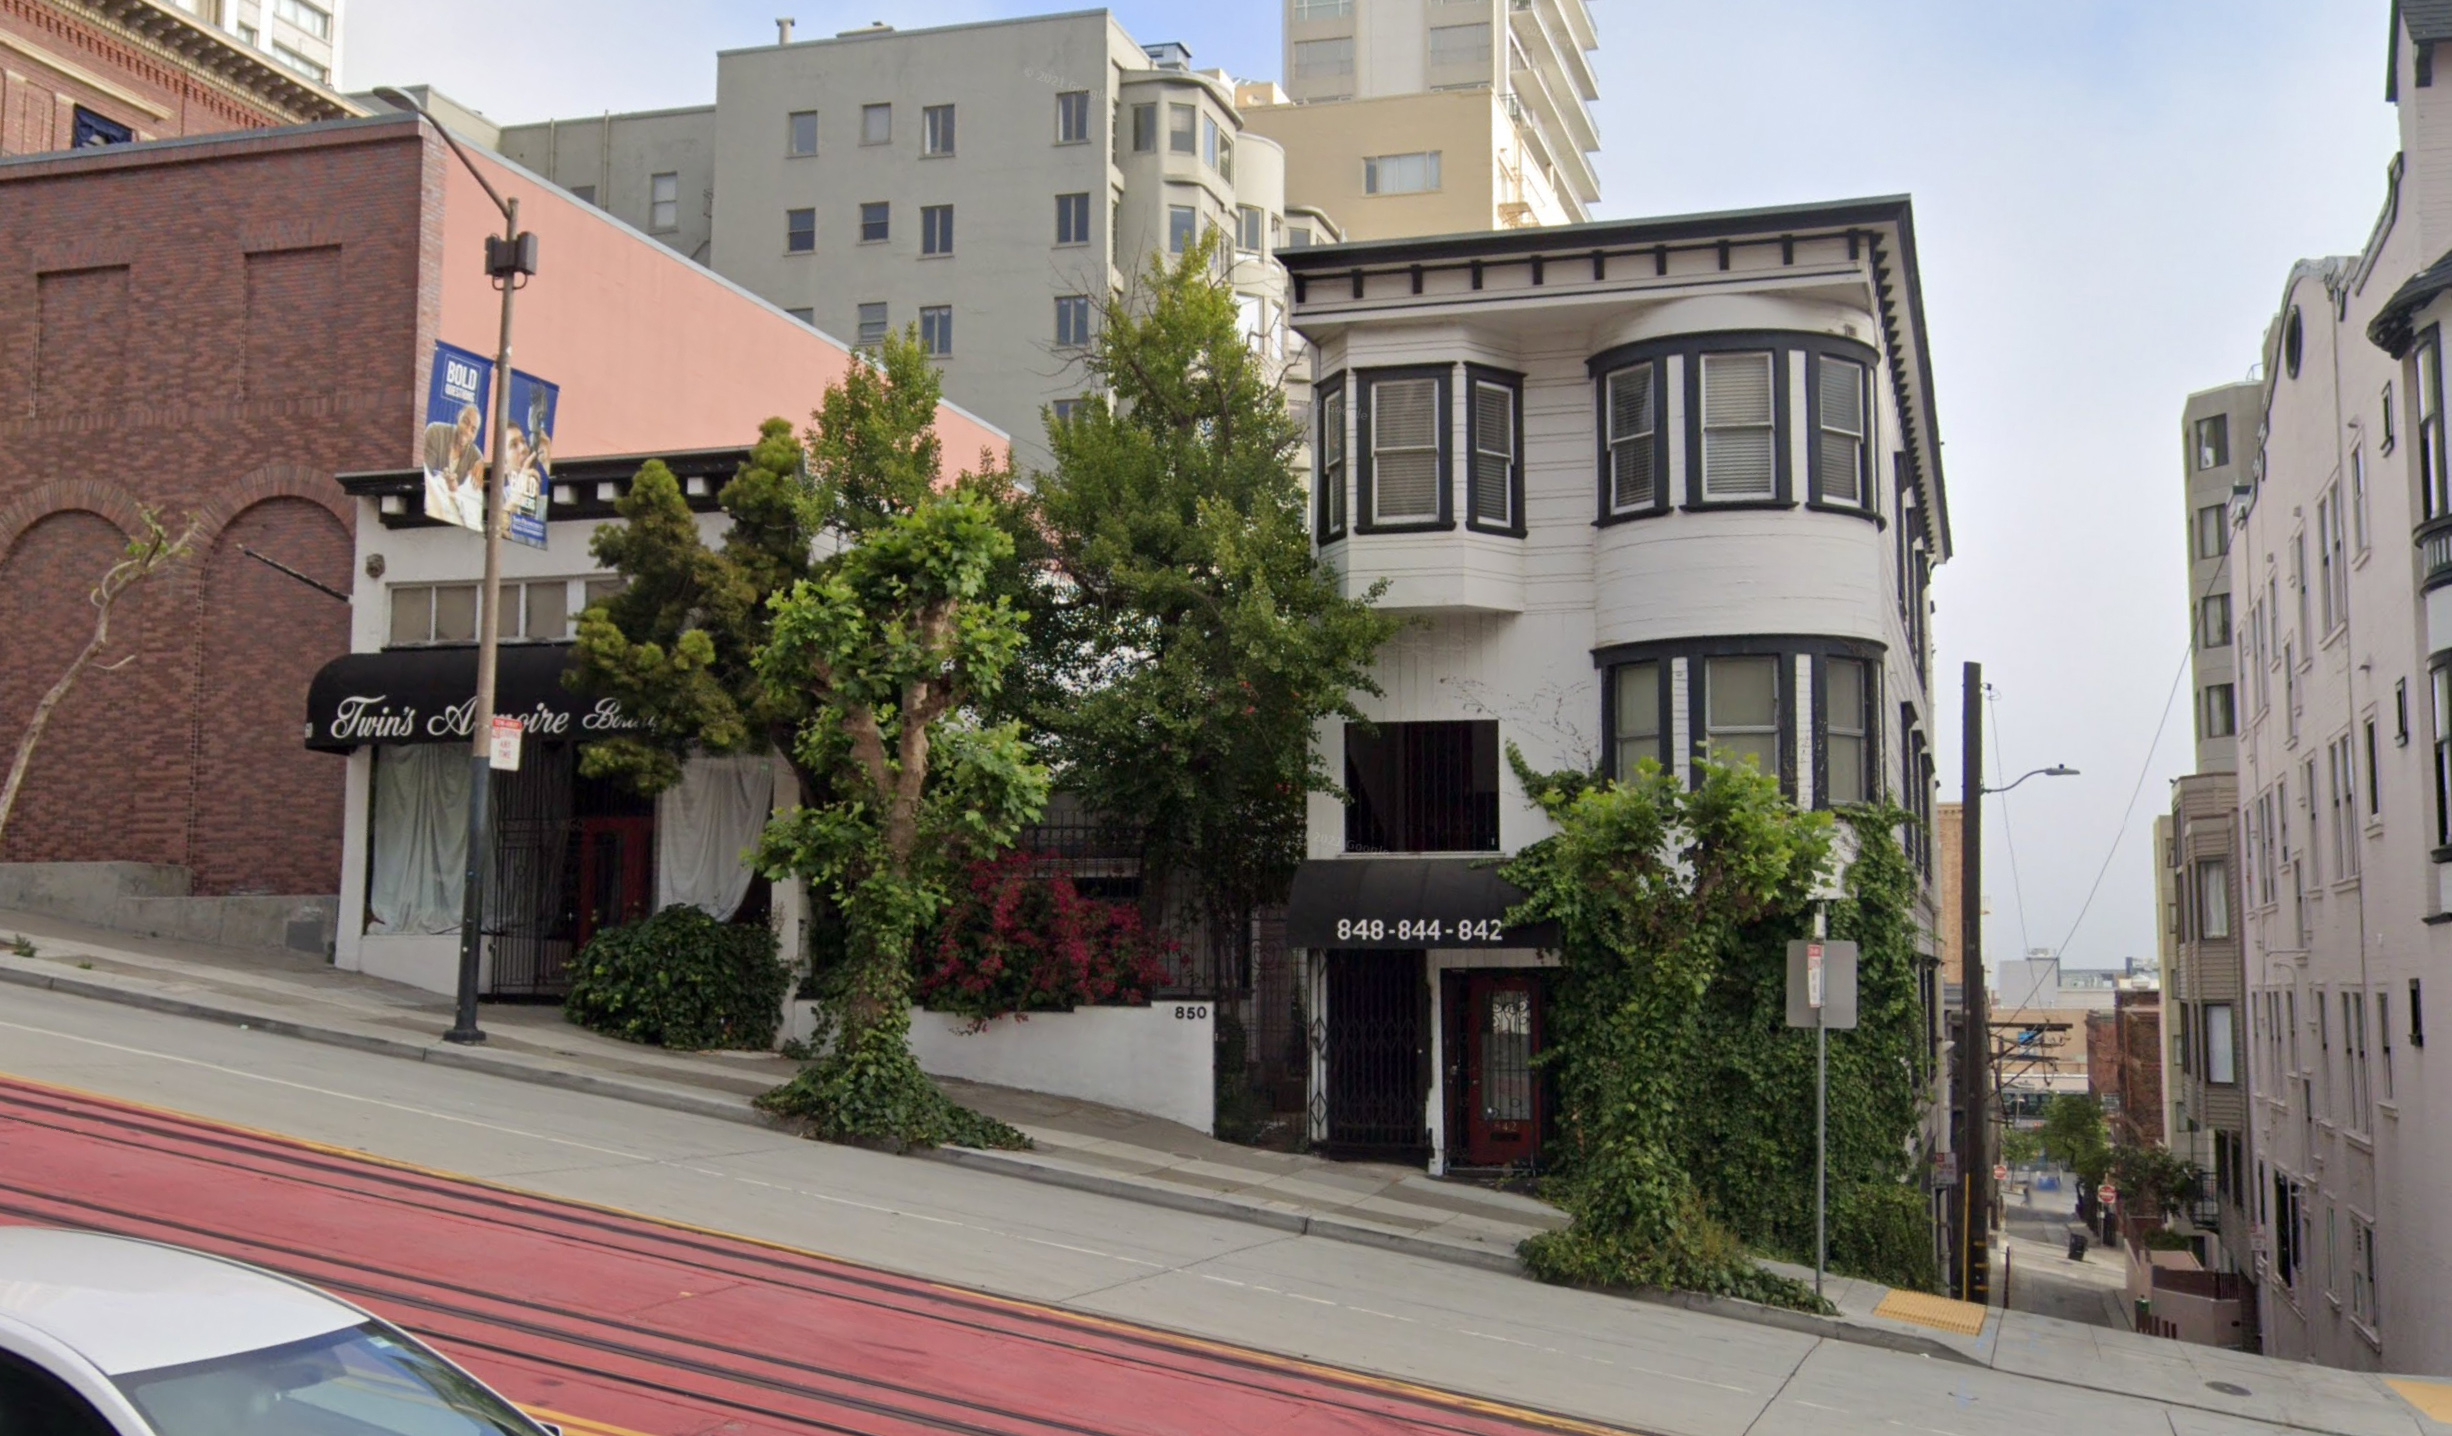 842-860 California Street , image via Google Street View